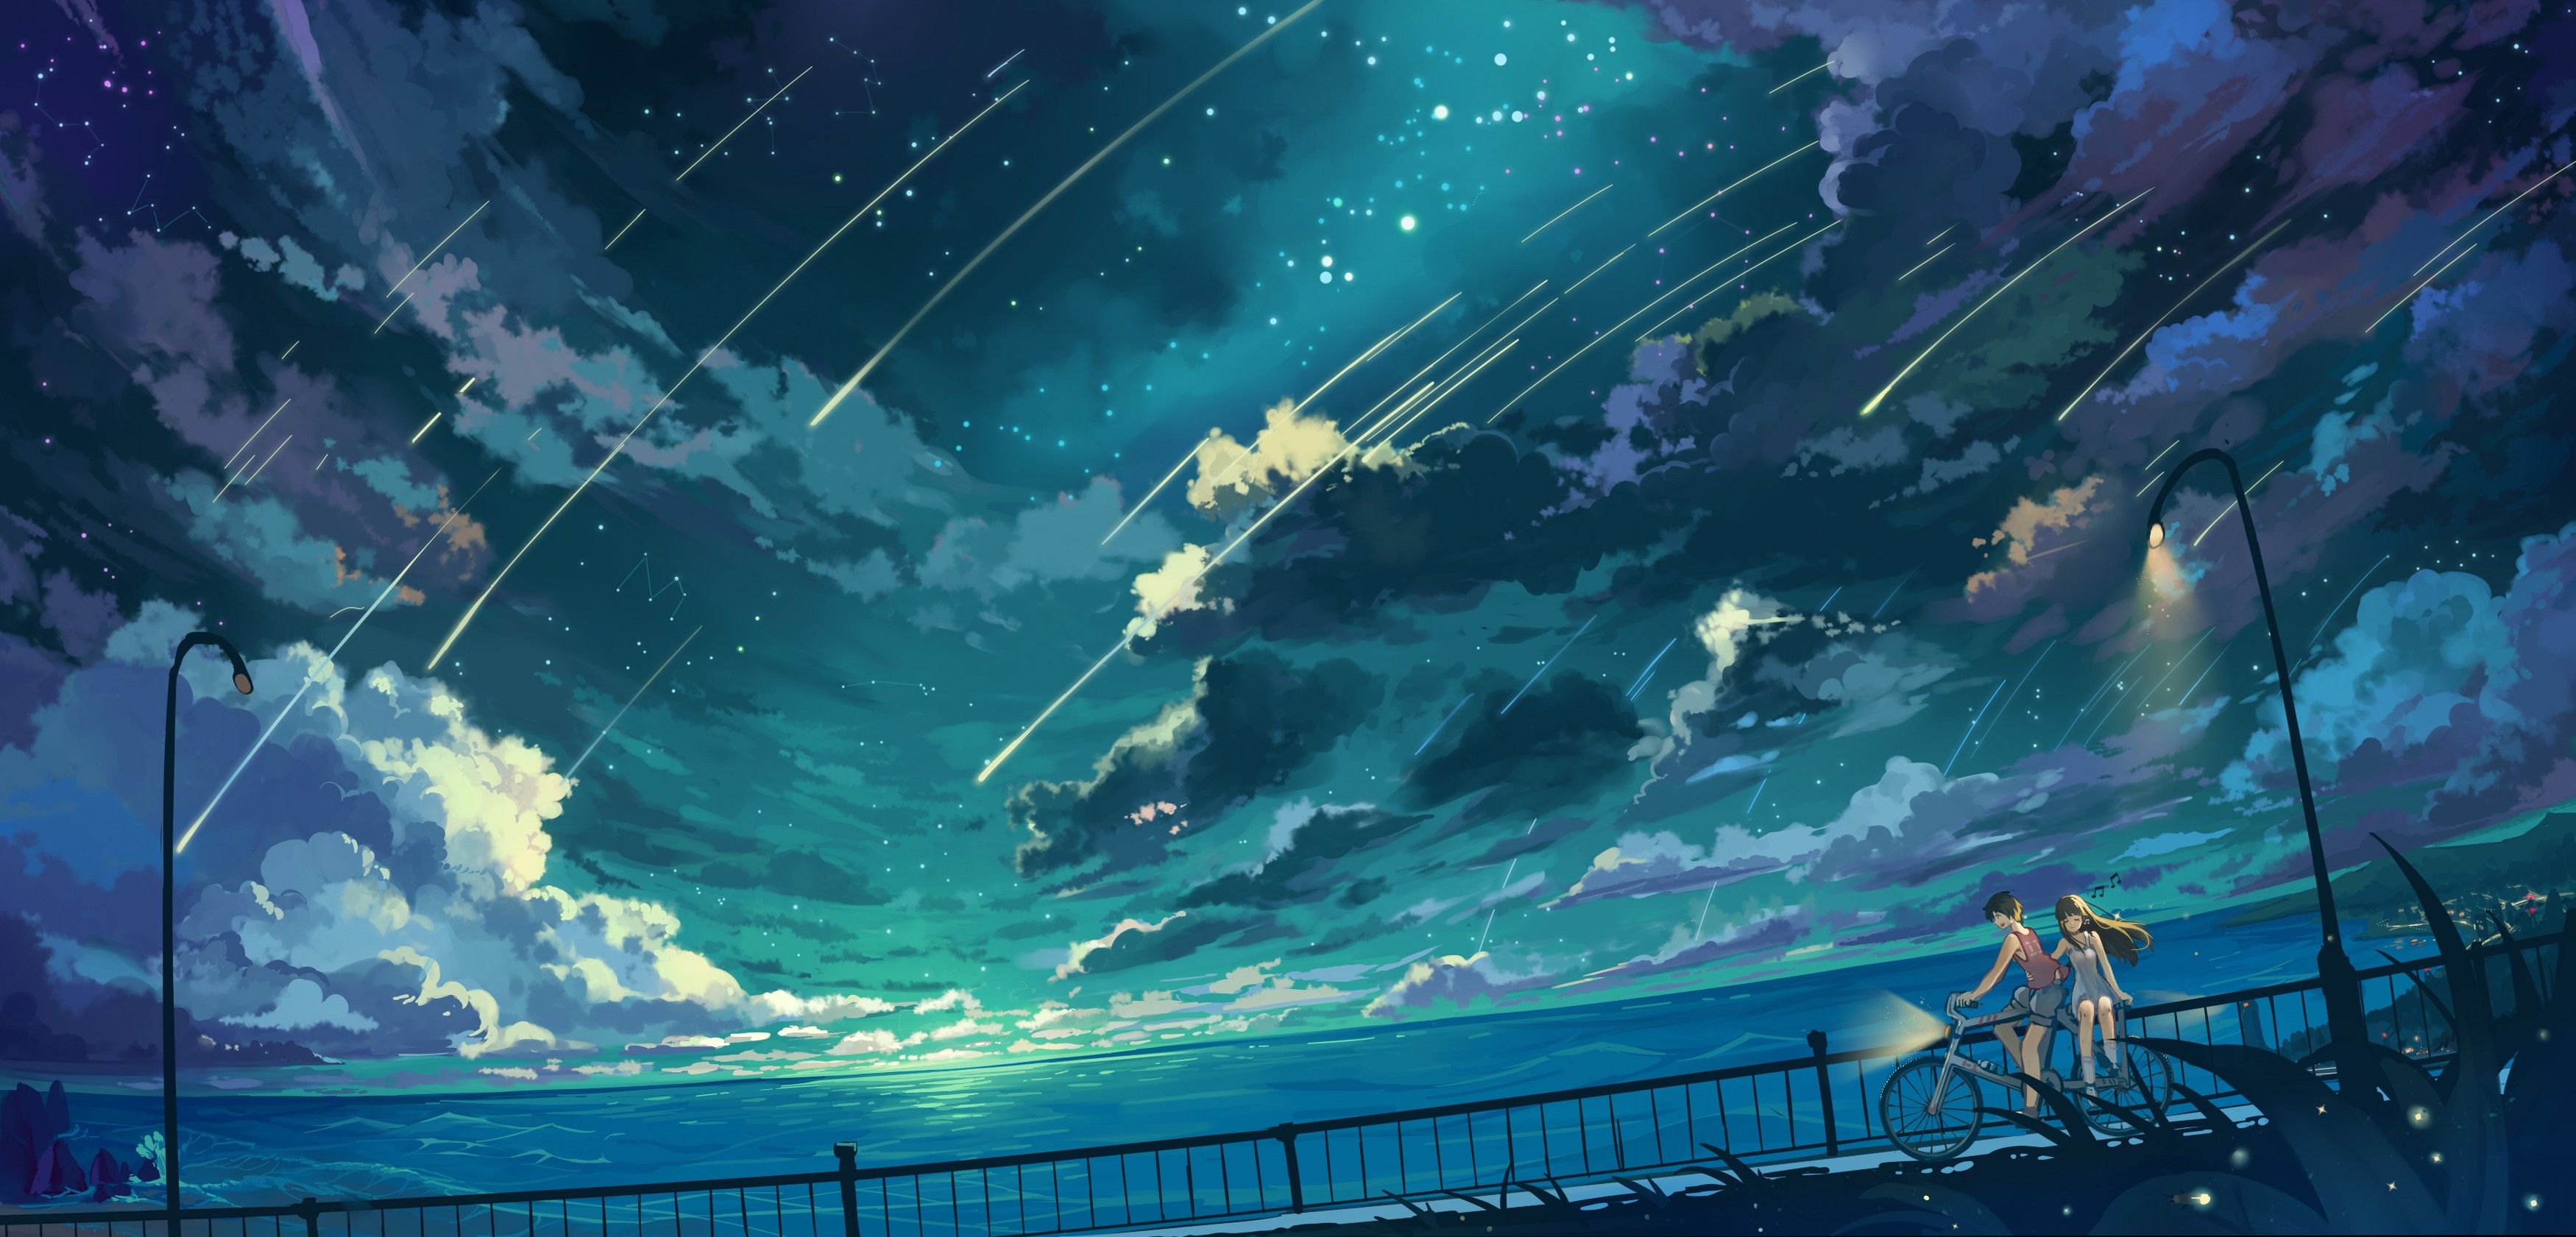 #sky, #stars, #night, #clouds, #bicycle, #anime, #sea